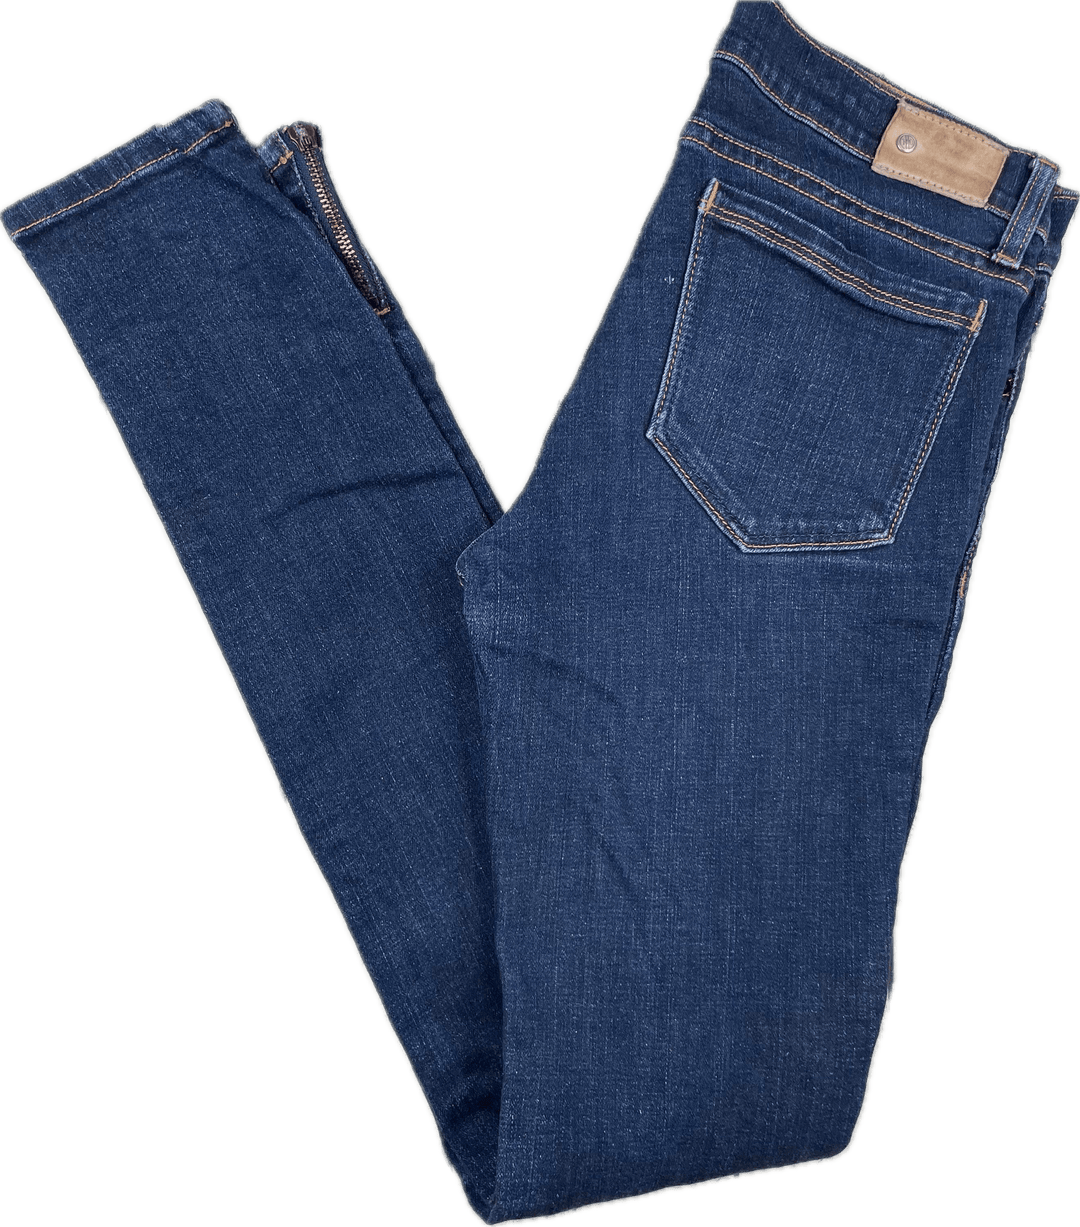 Tommy Hilfiger 'Nina Skinny' Ankle Zip Jeans - Size 28/32 - Jean Pool